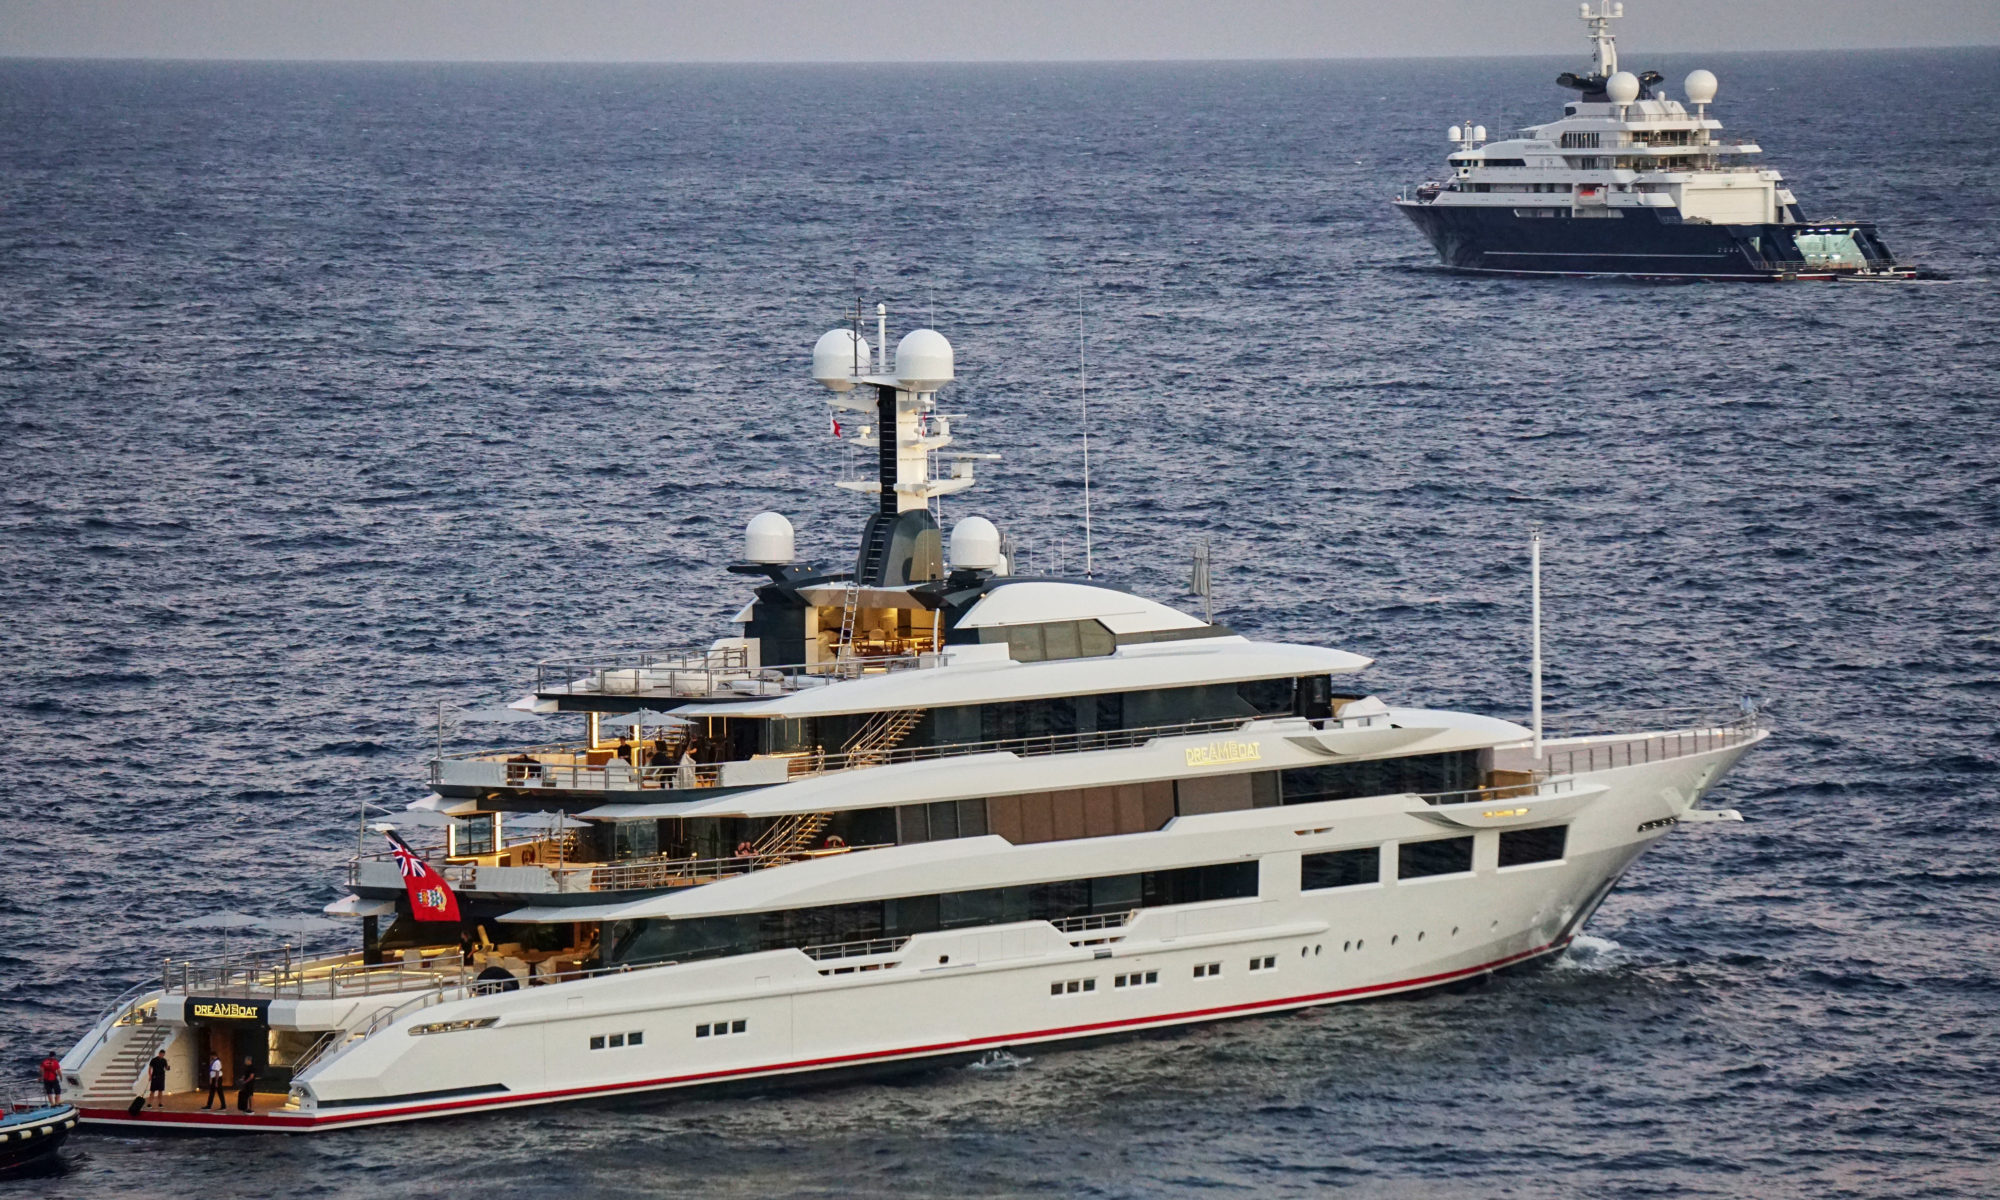 Dreamboat-in-Monaco-2019-Superyachtblog-2